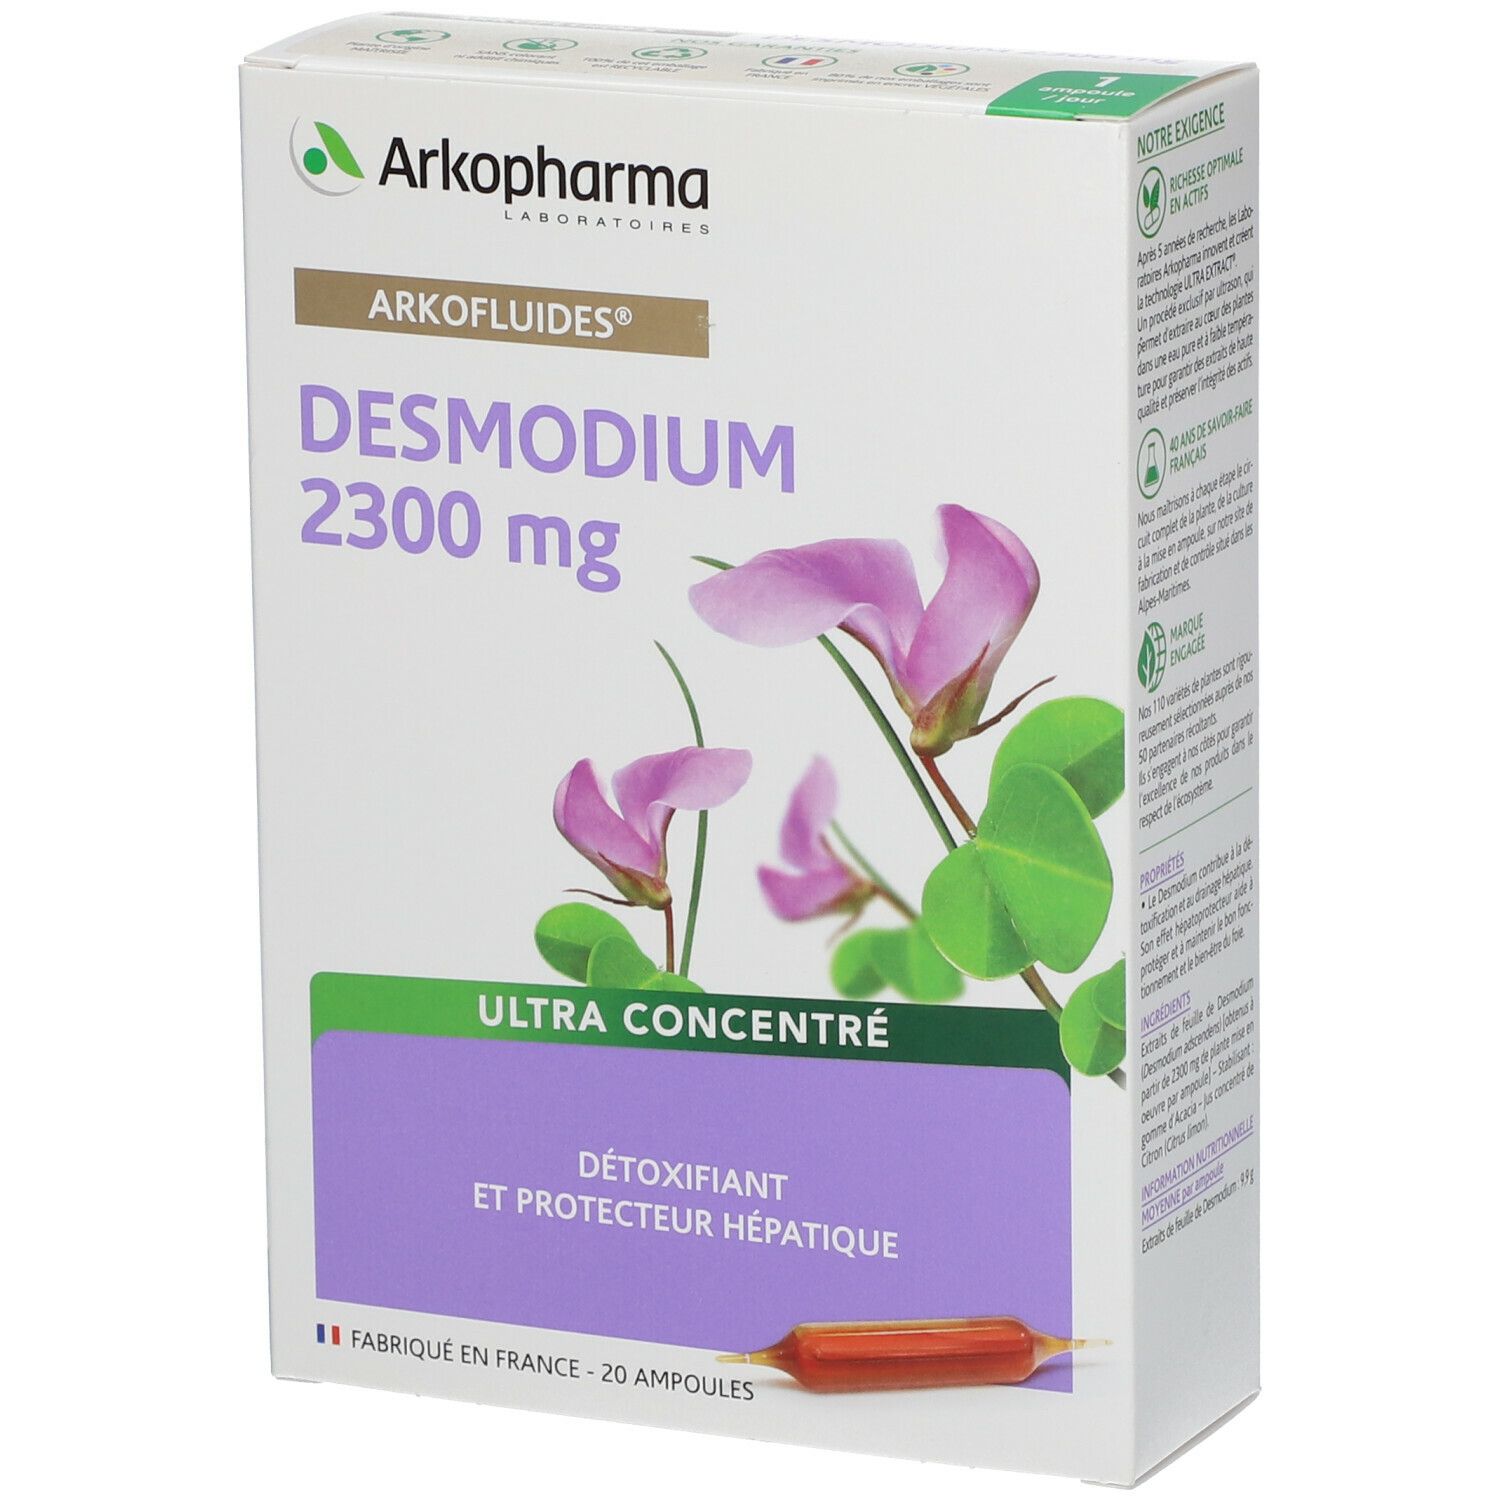 Arkopharma Arkofluides® Desmodium 2300 mg